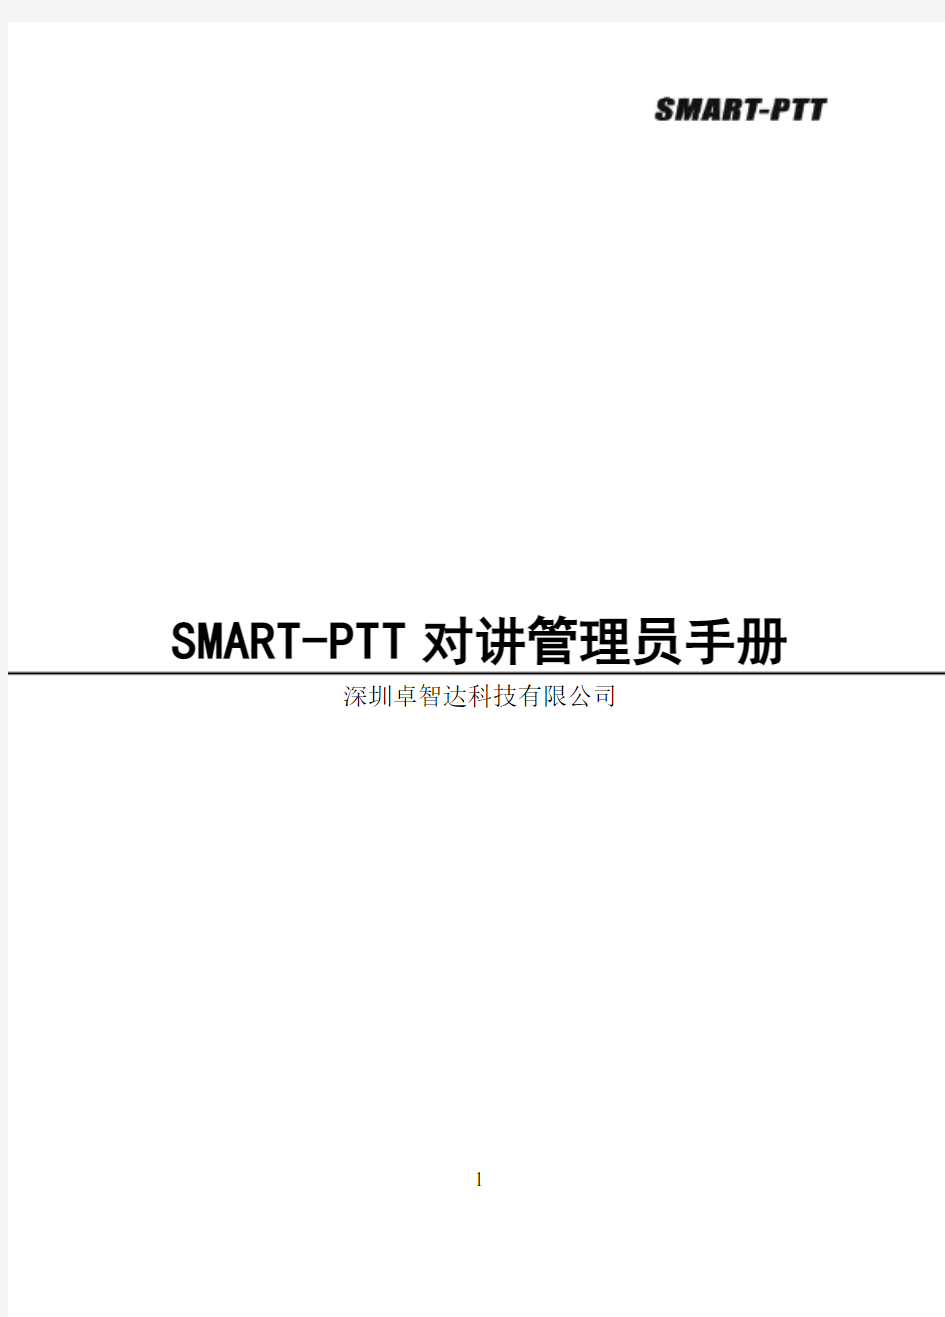 SMART-PTT企业管理平台操作手册